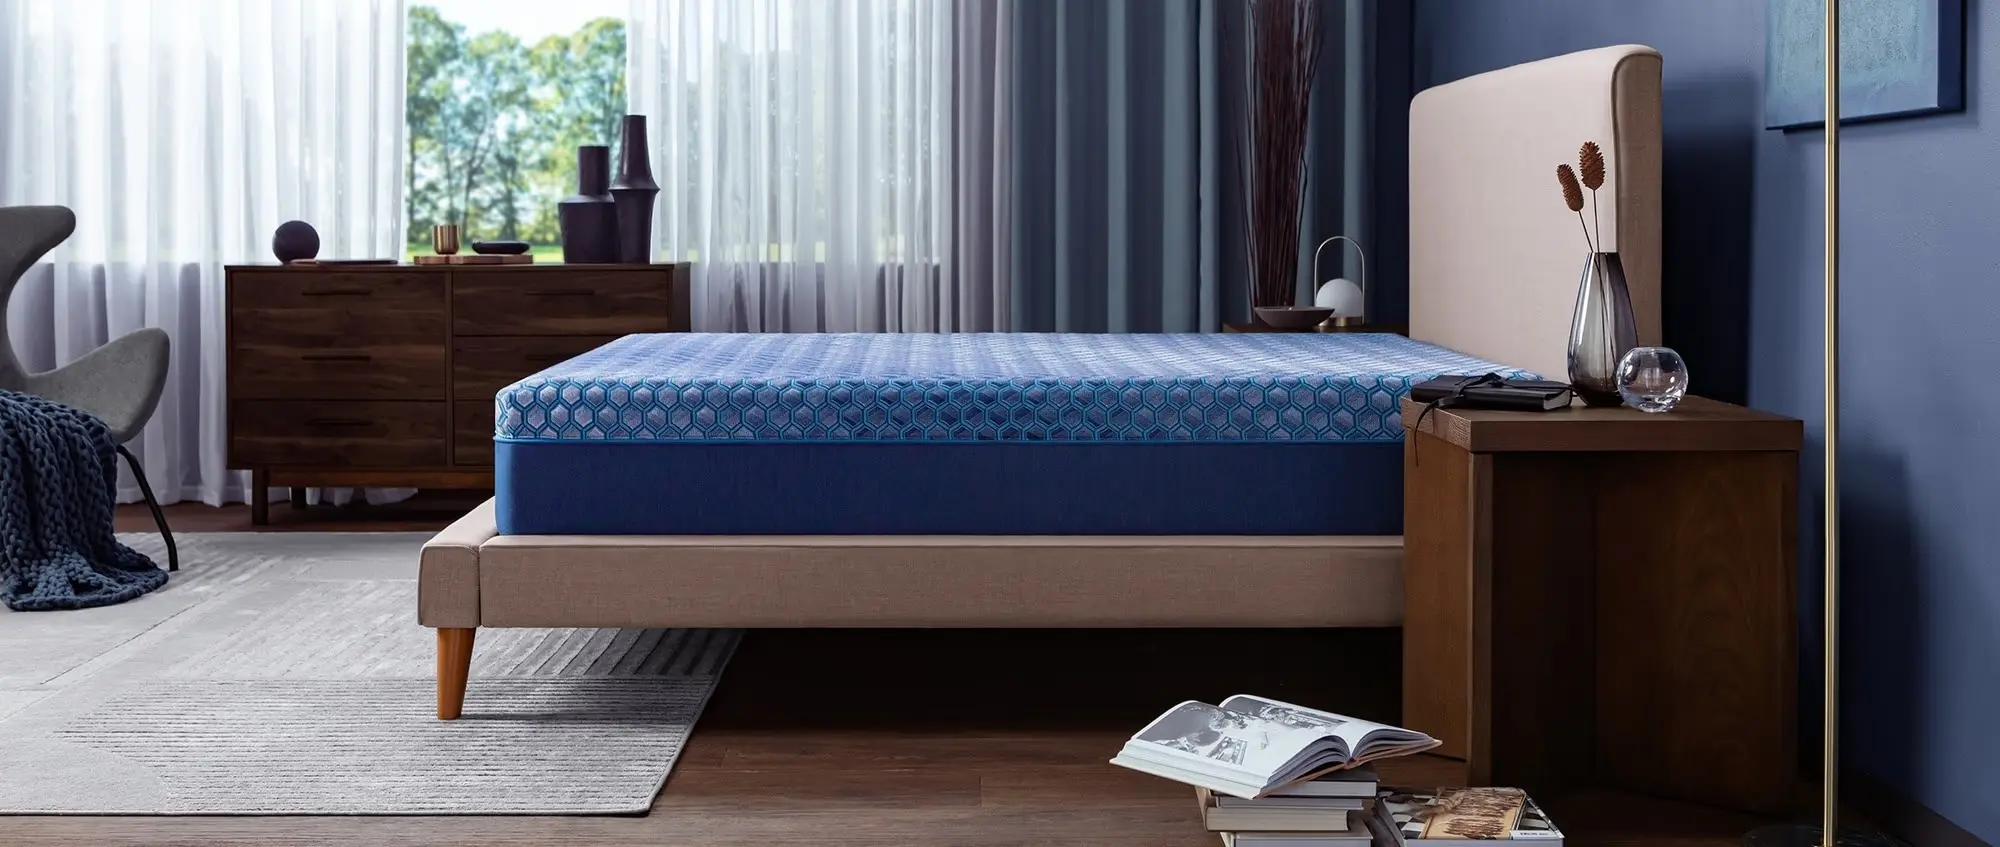  Sealy FlexGrid mattress